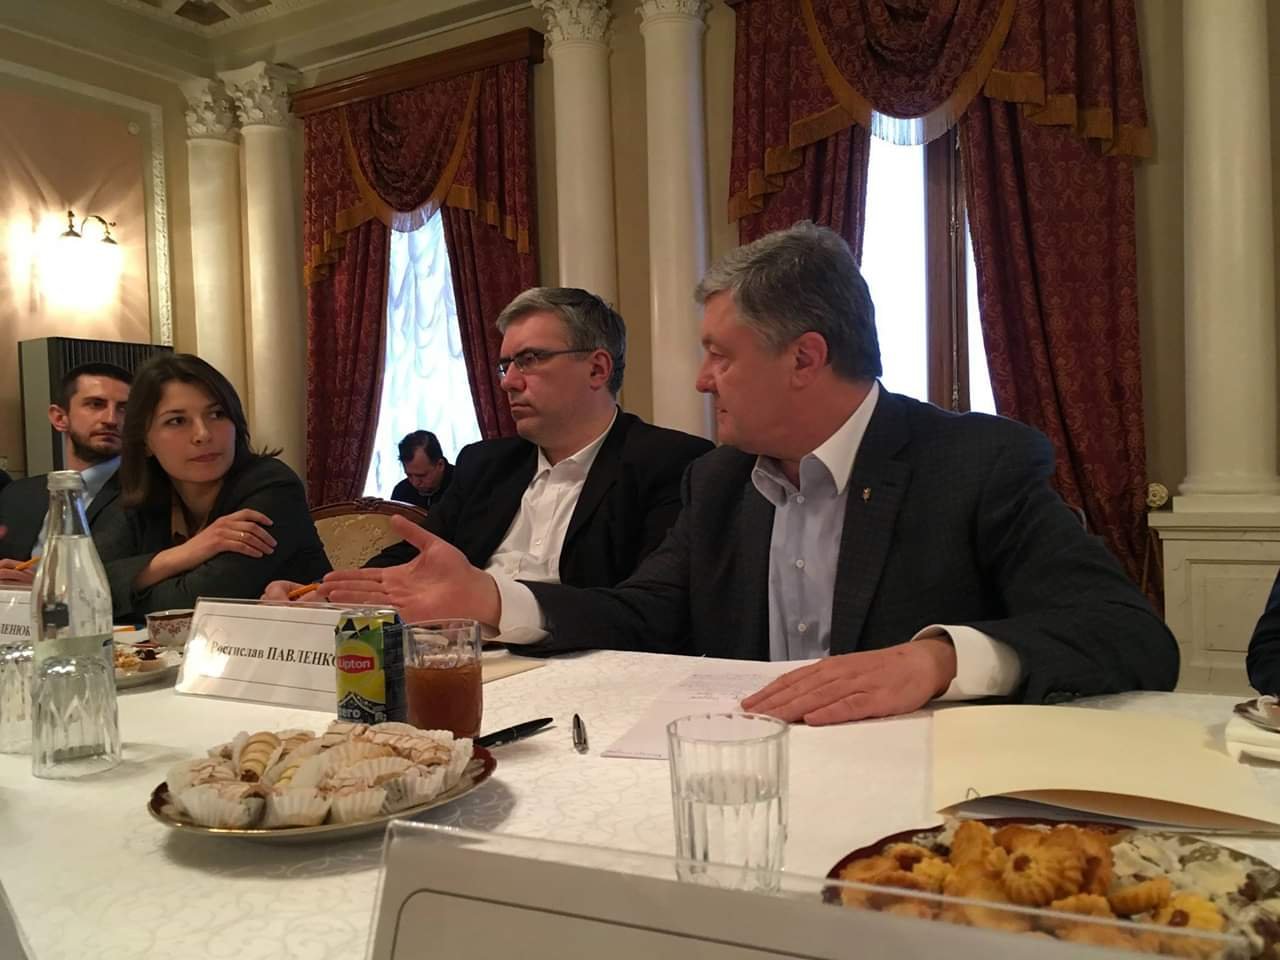 Poroshenko at the meeting with civil activists. Source: Daria Kaleniuk’s Facebook ~